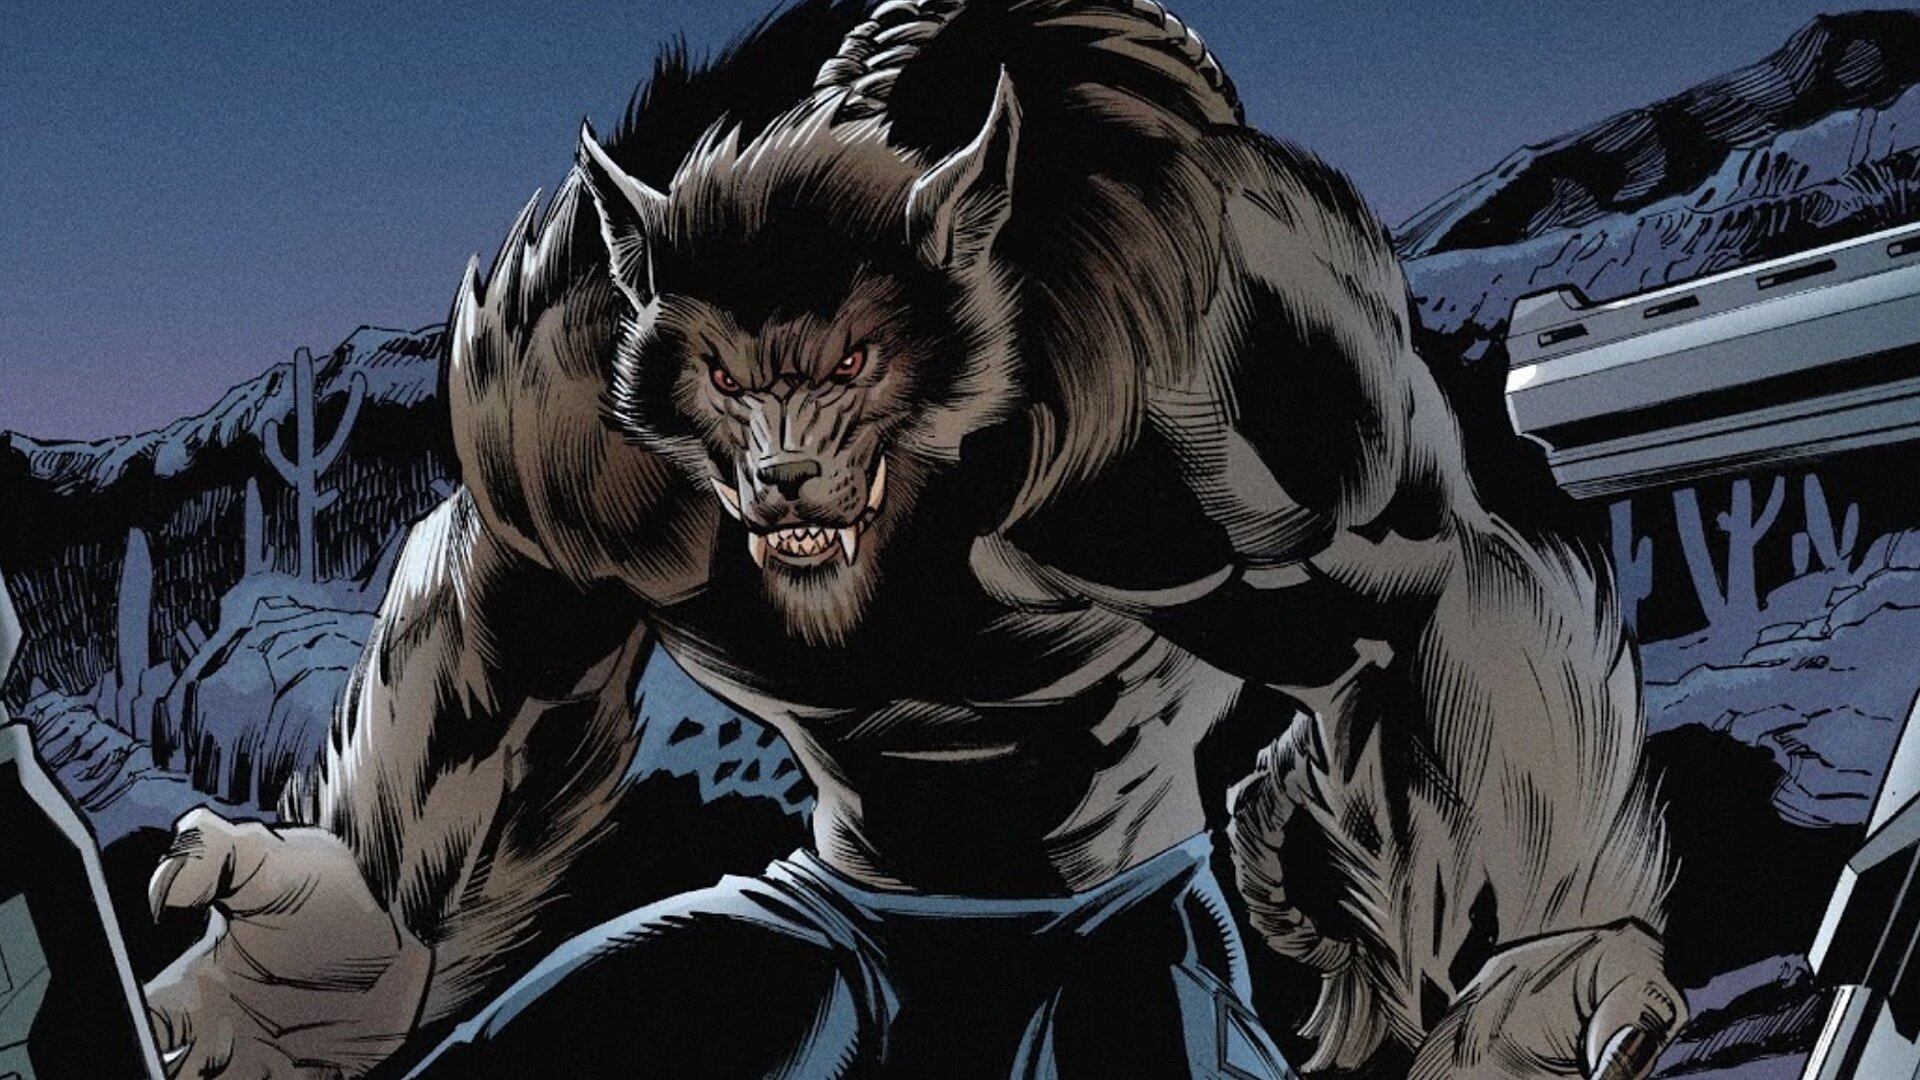 Marvel Studios' Special: Werewolf By Night (2022)